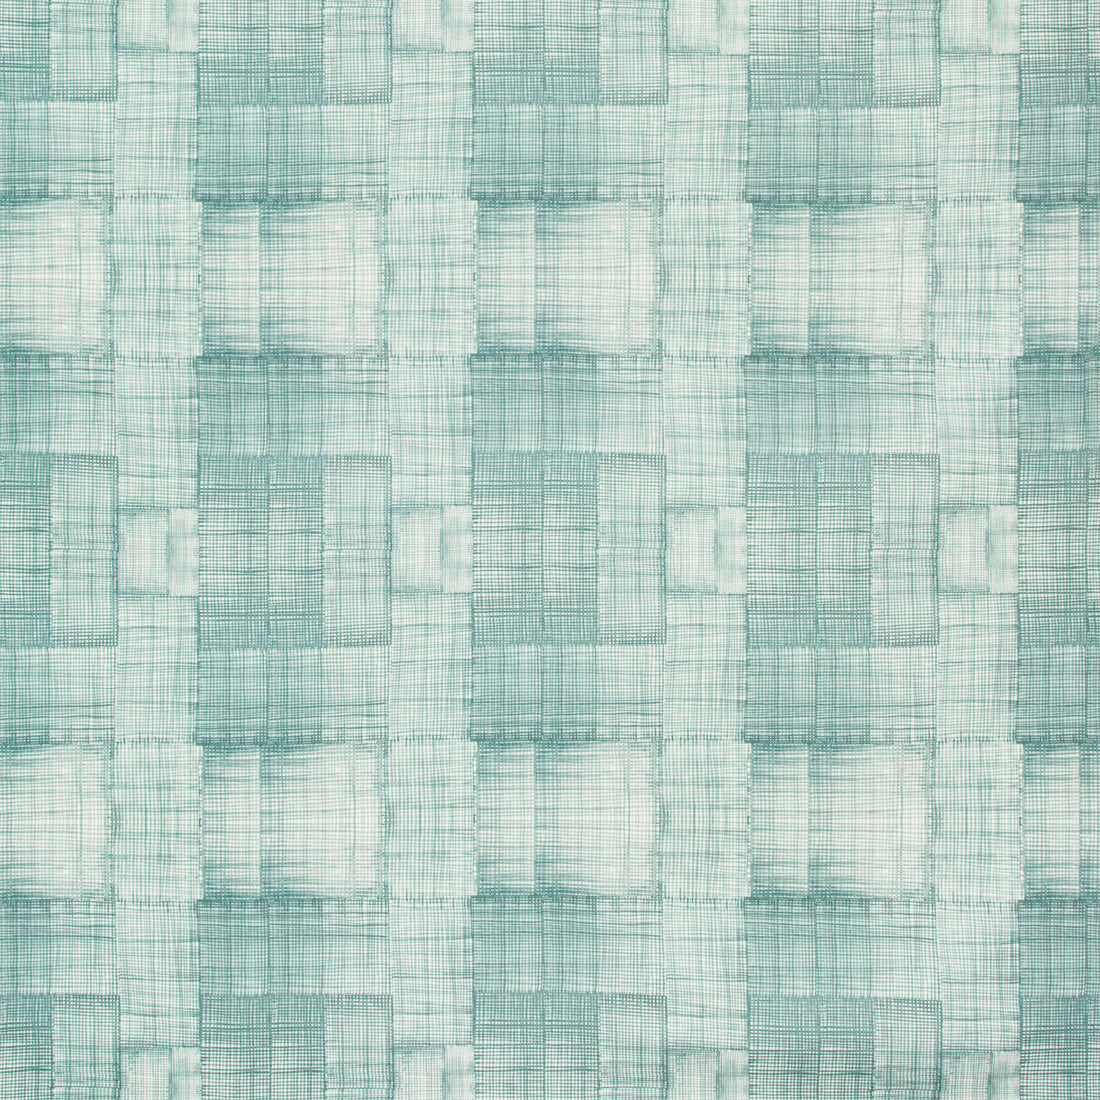 Lj Grw fabric - pattern 2019147.35.0 - by Lee Jofa Modern in the Kw Terra Firma III Indoor Outdoor collection